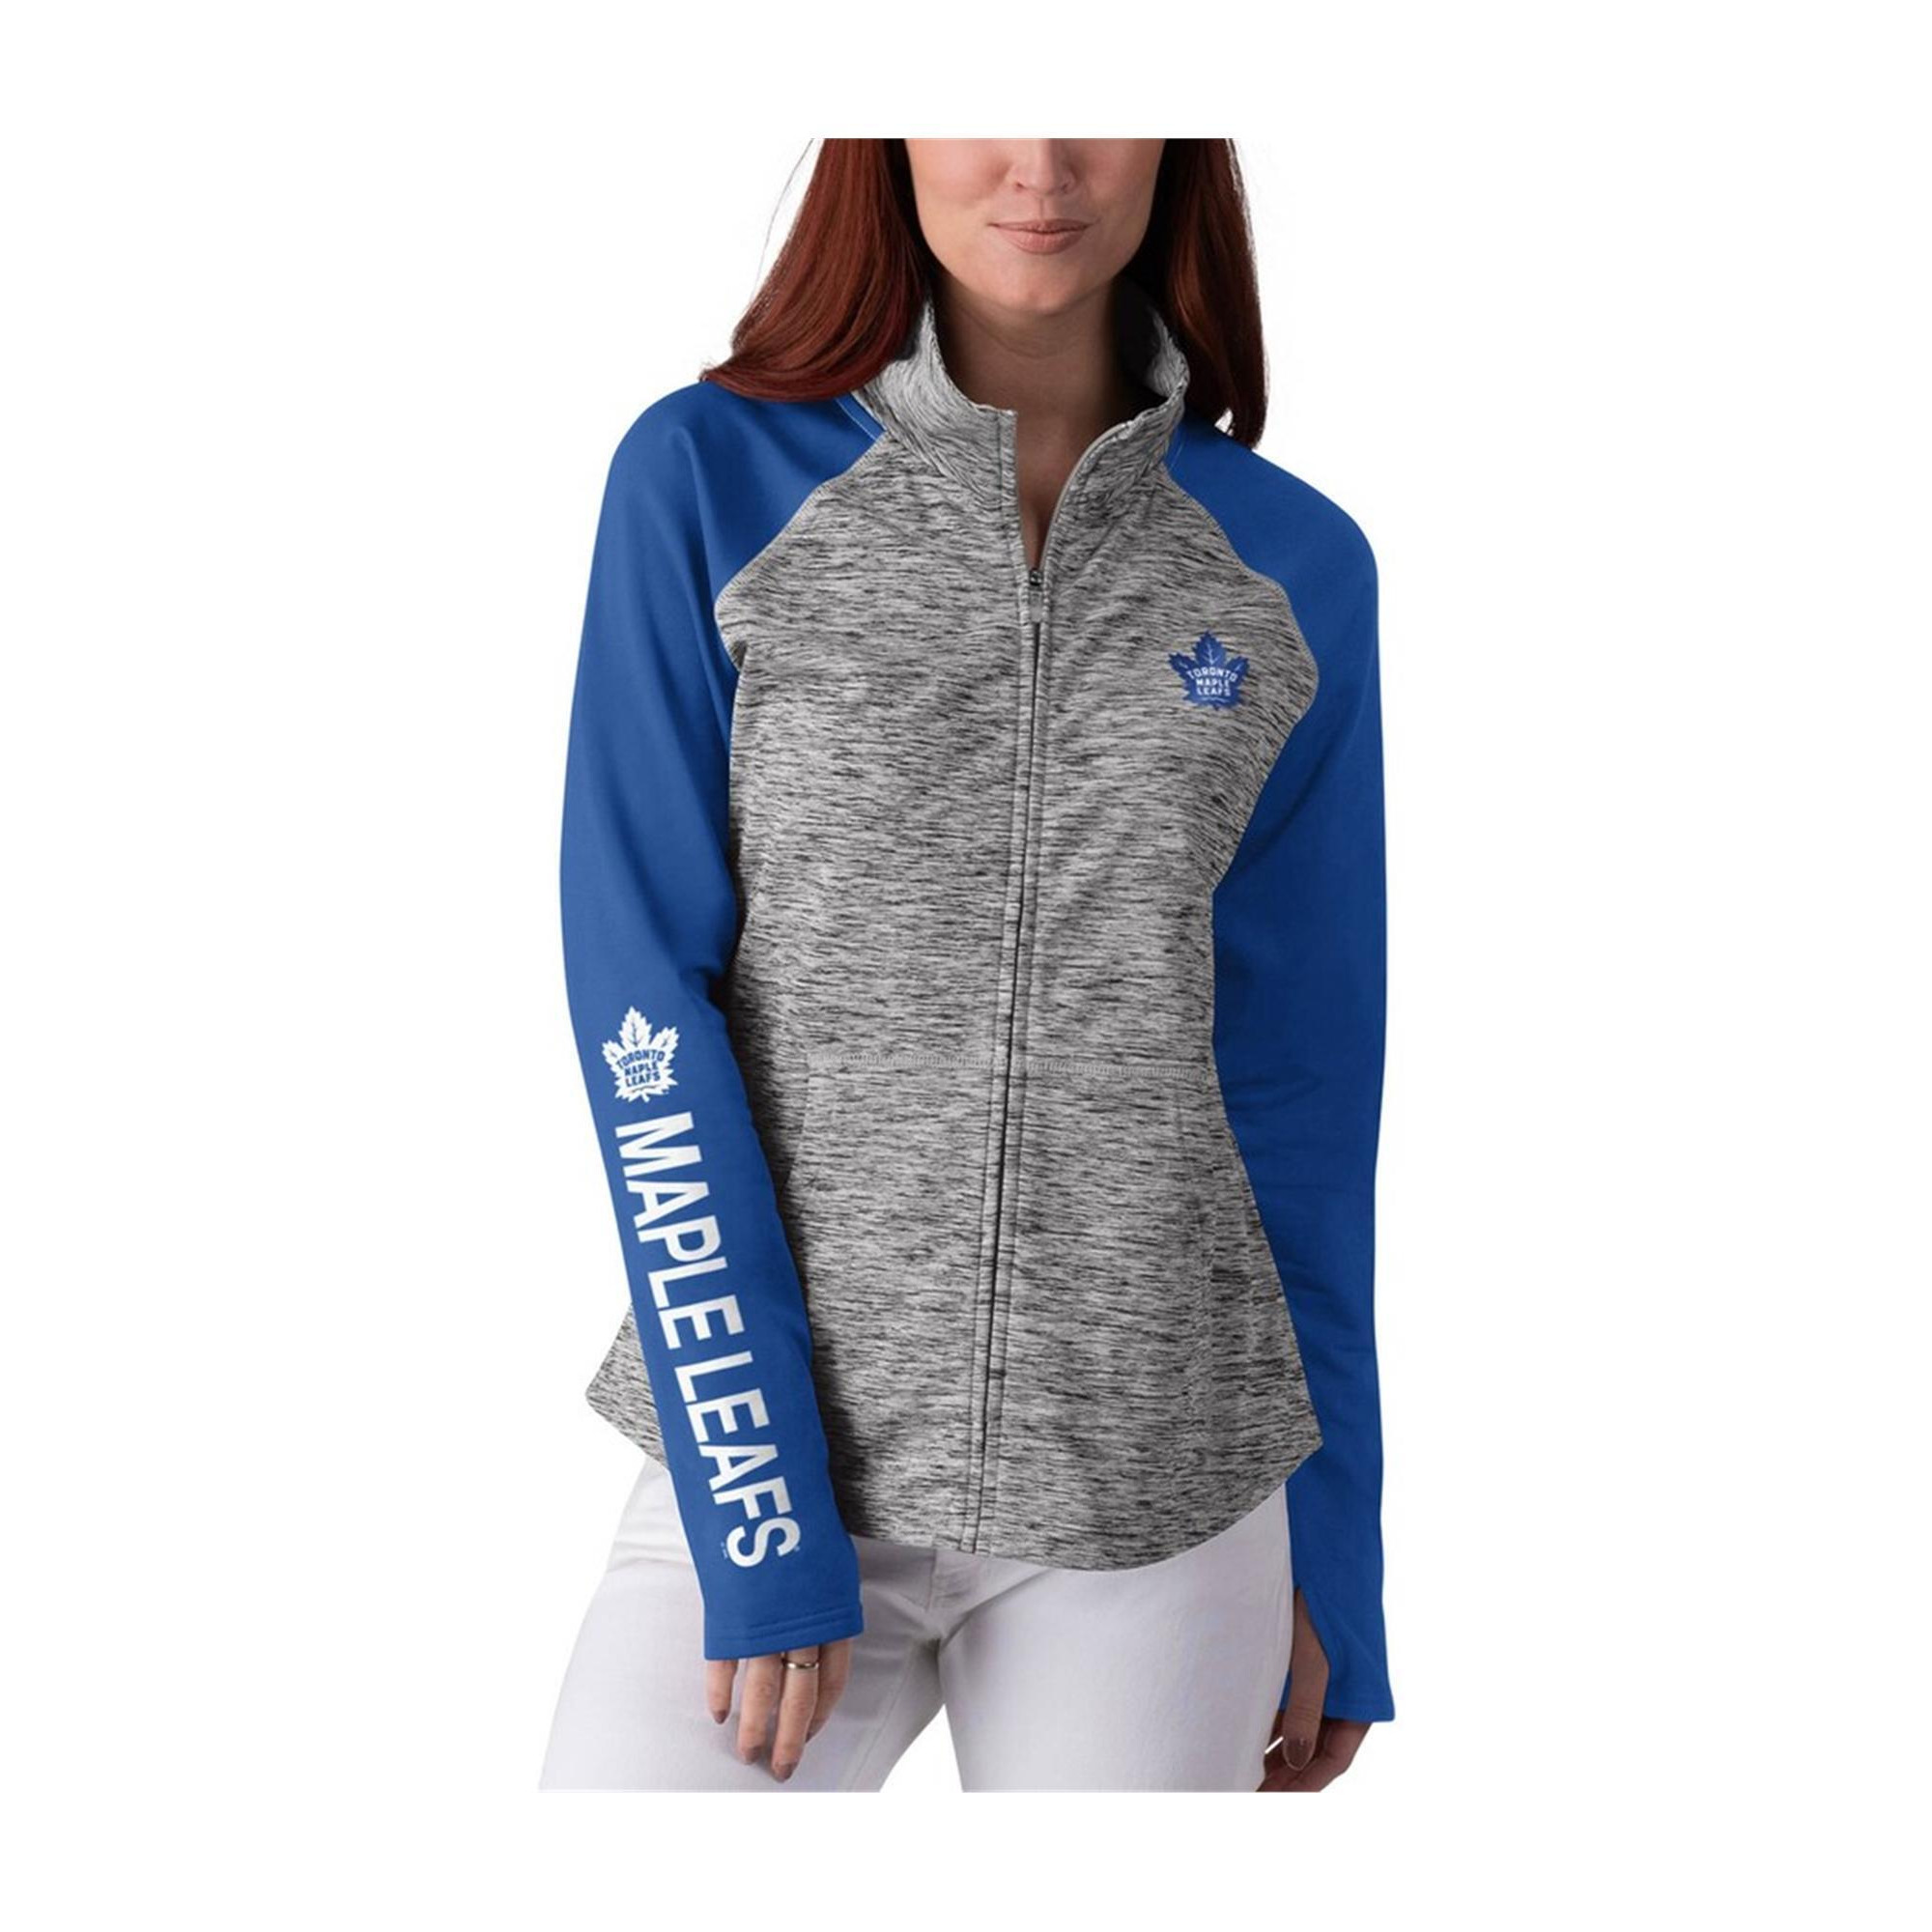 G-III Sports Womens Toronto Maple Leafs Track Jacket Sweatshirt, Style # 6J0-977